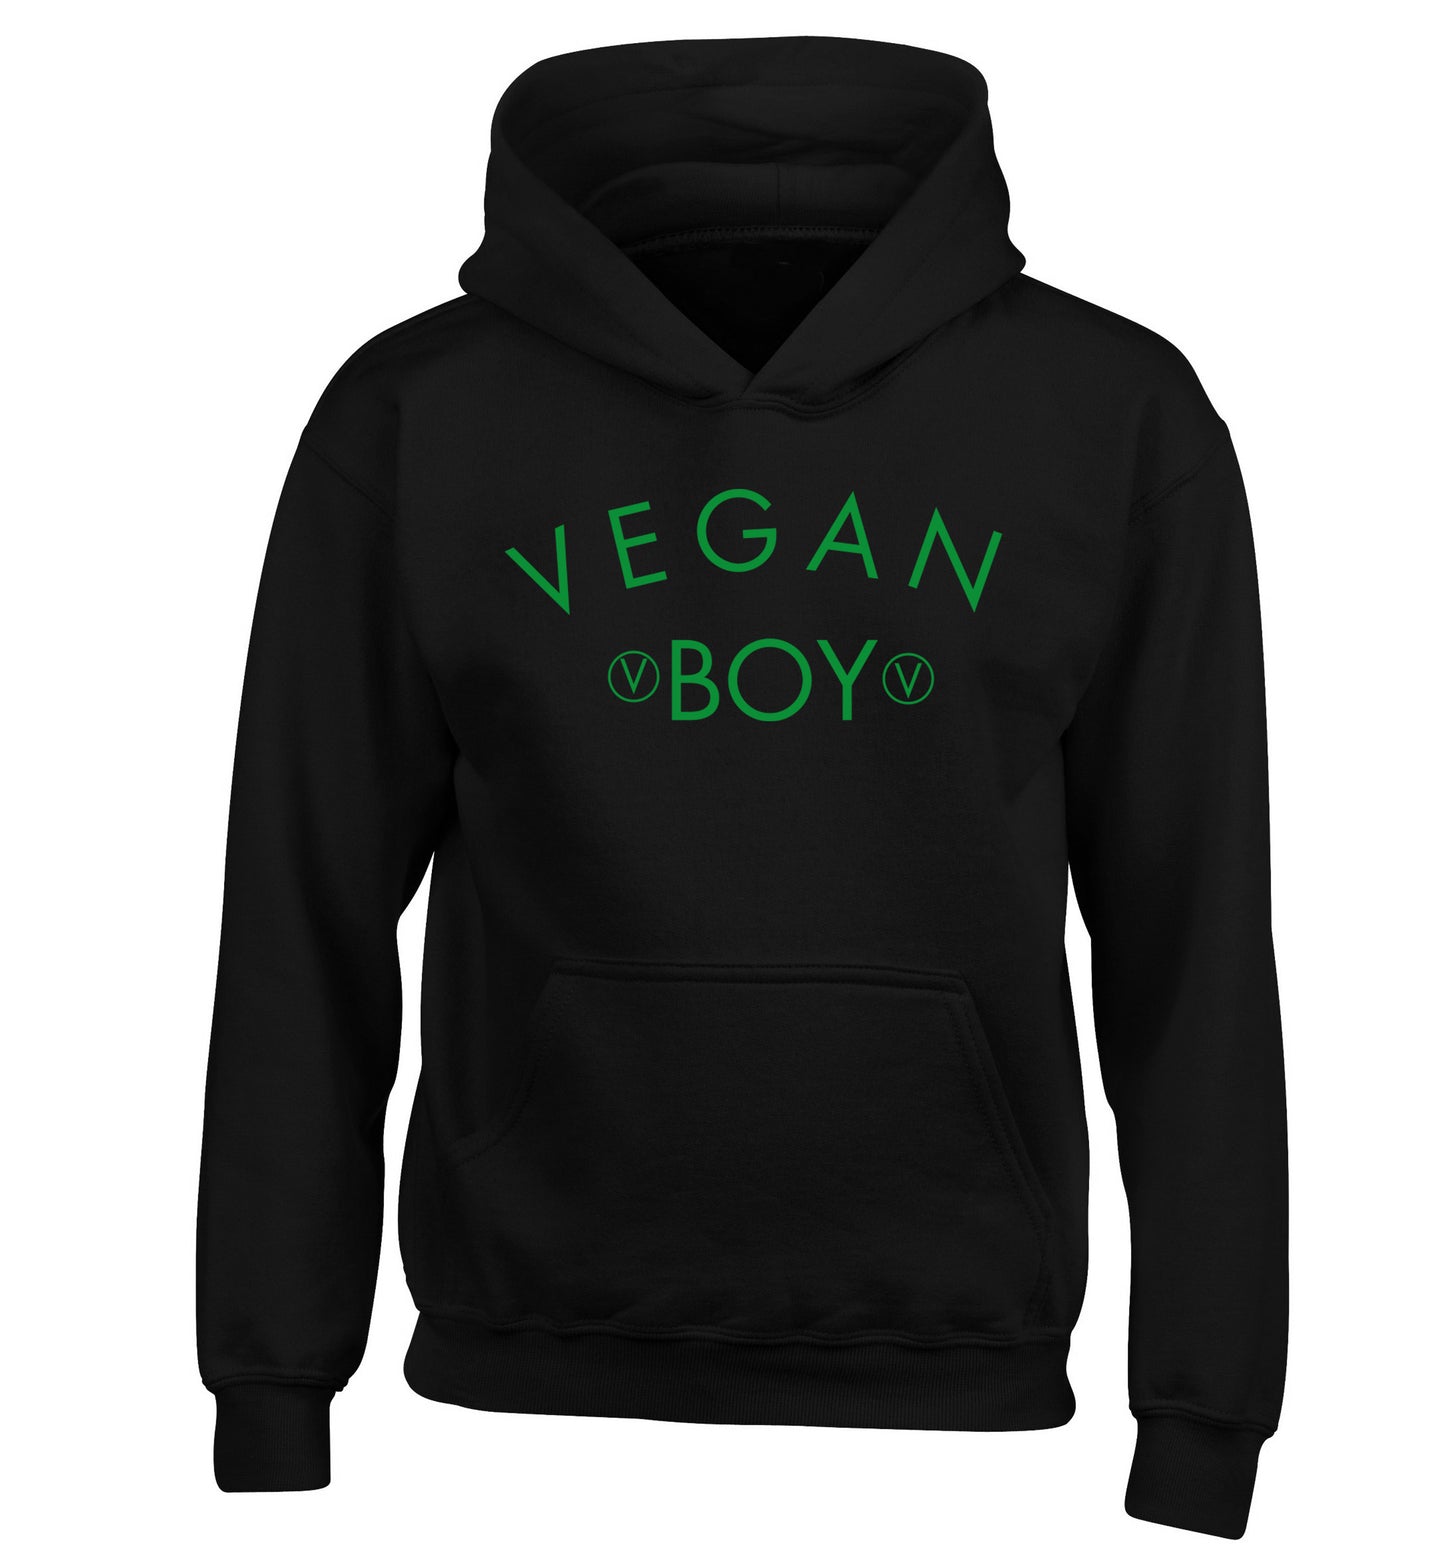 Vegan boy children's black hoodie 12-14 Years